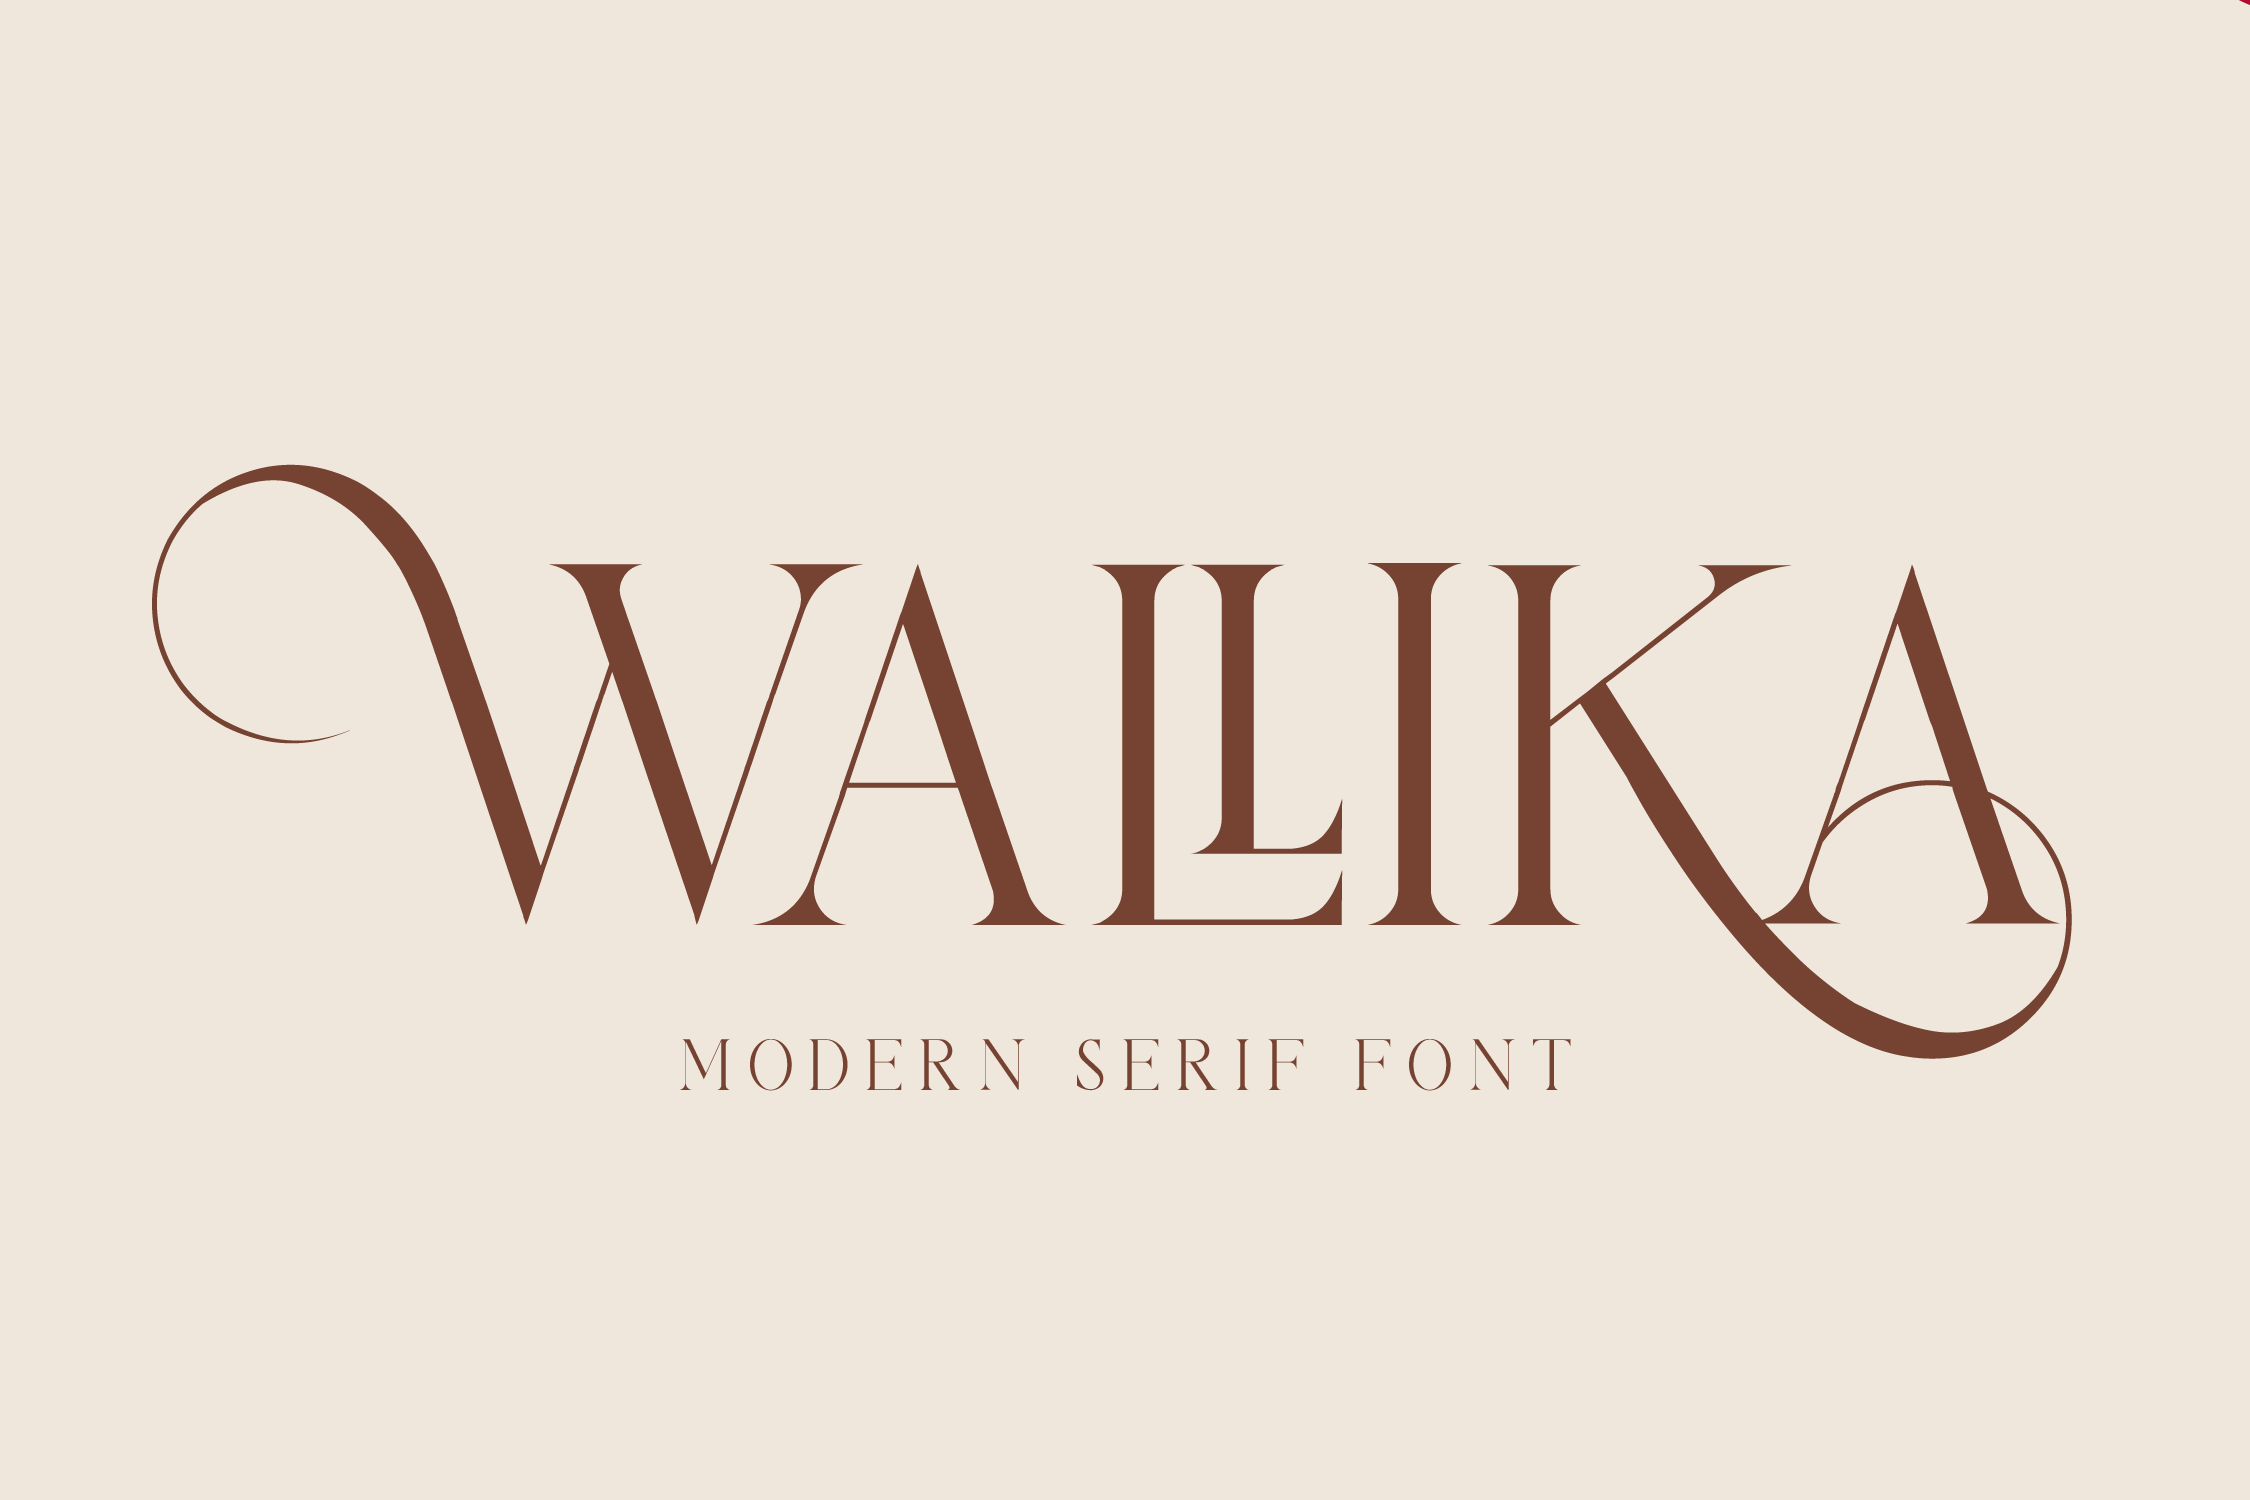 Wallika